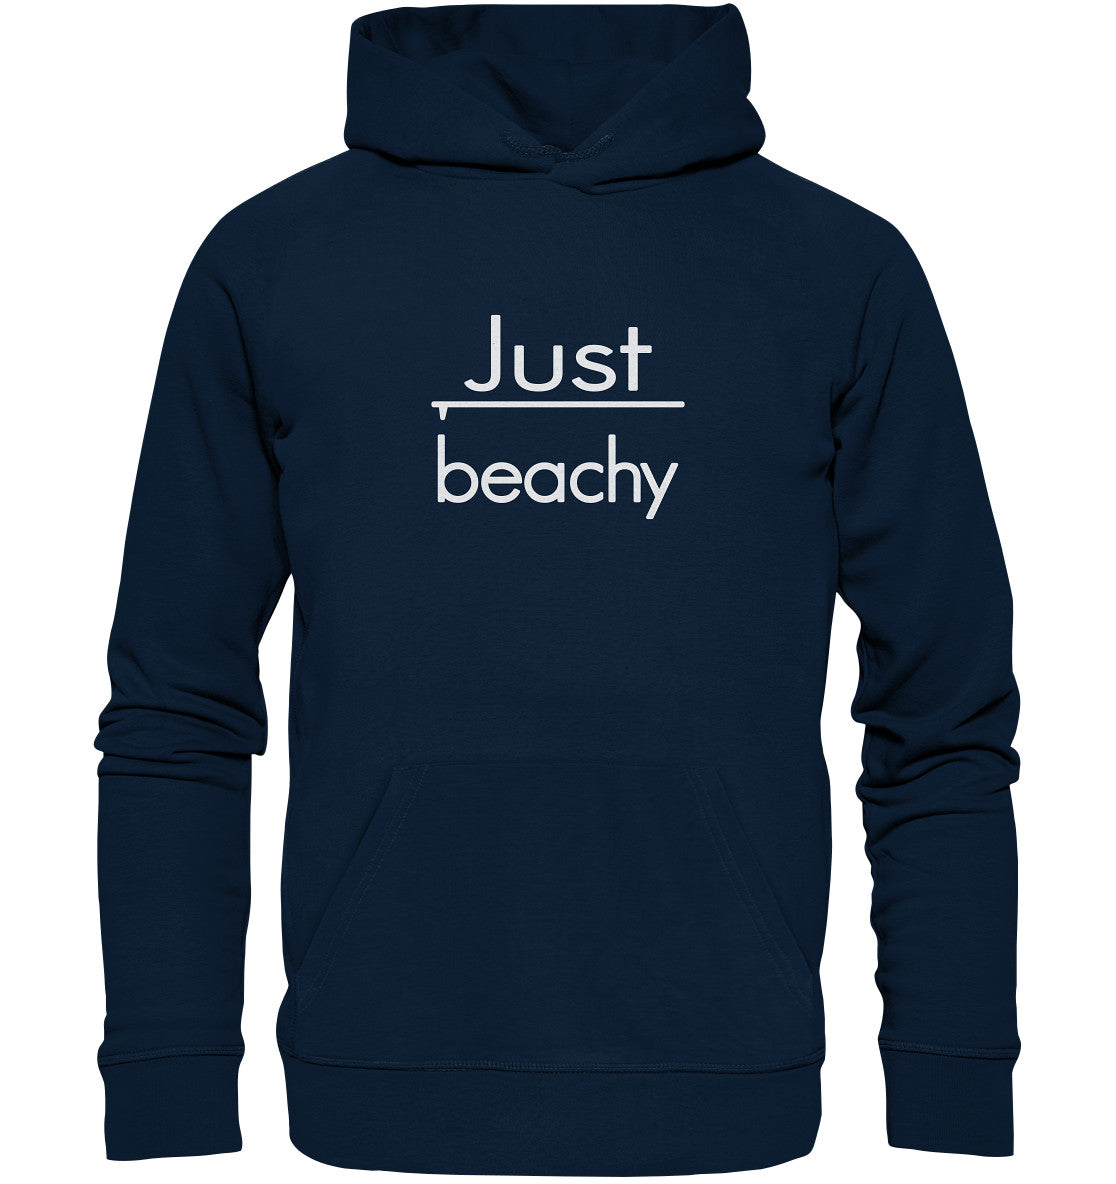 Boardtime-Just beachy - Organic Hoodie